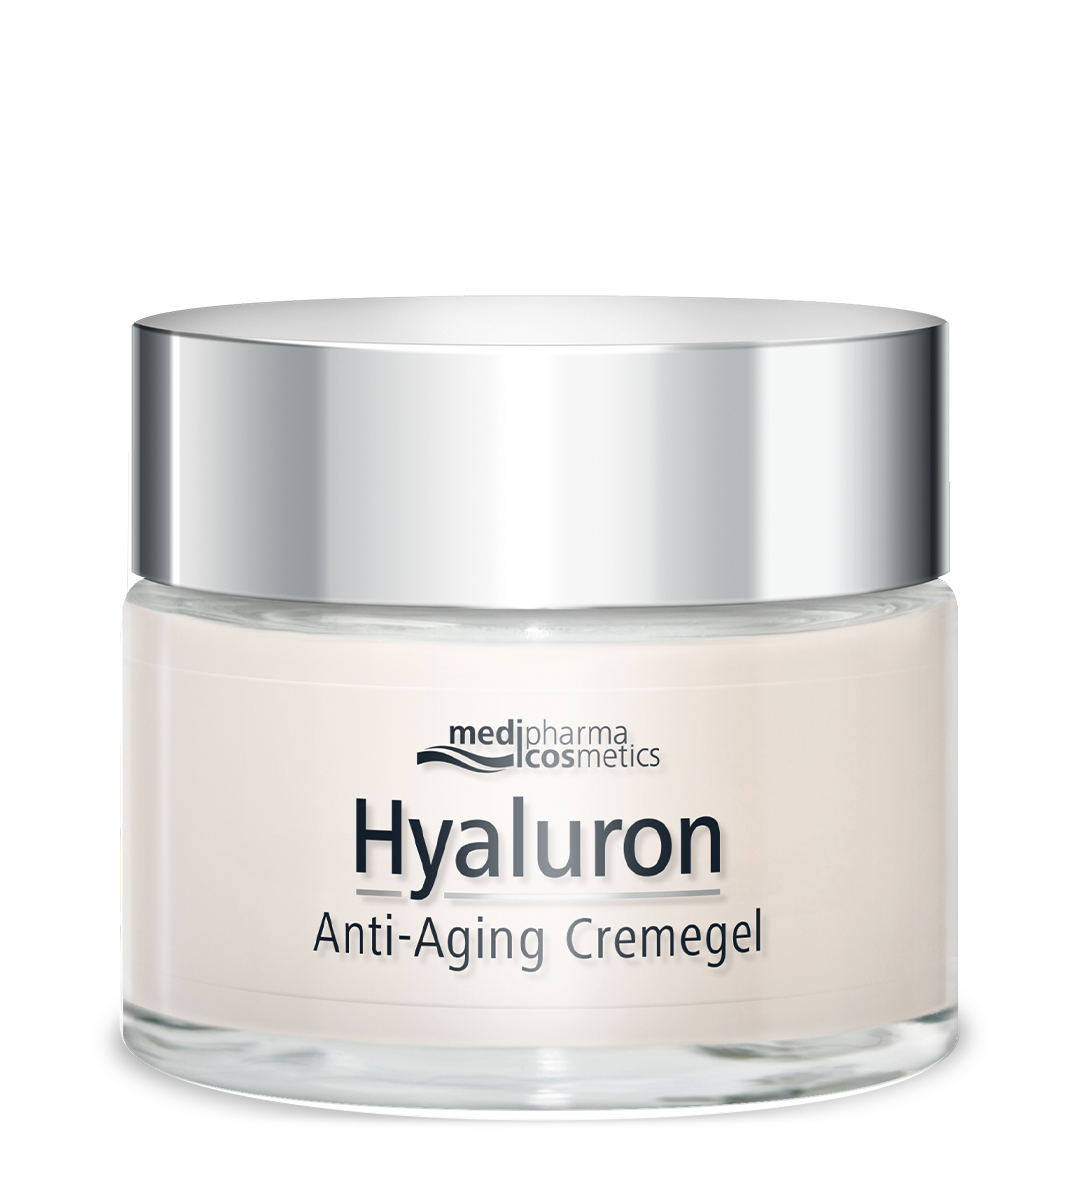 Hyaluron Anti-Aging Cemegel